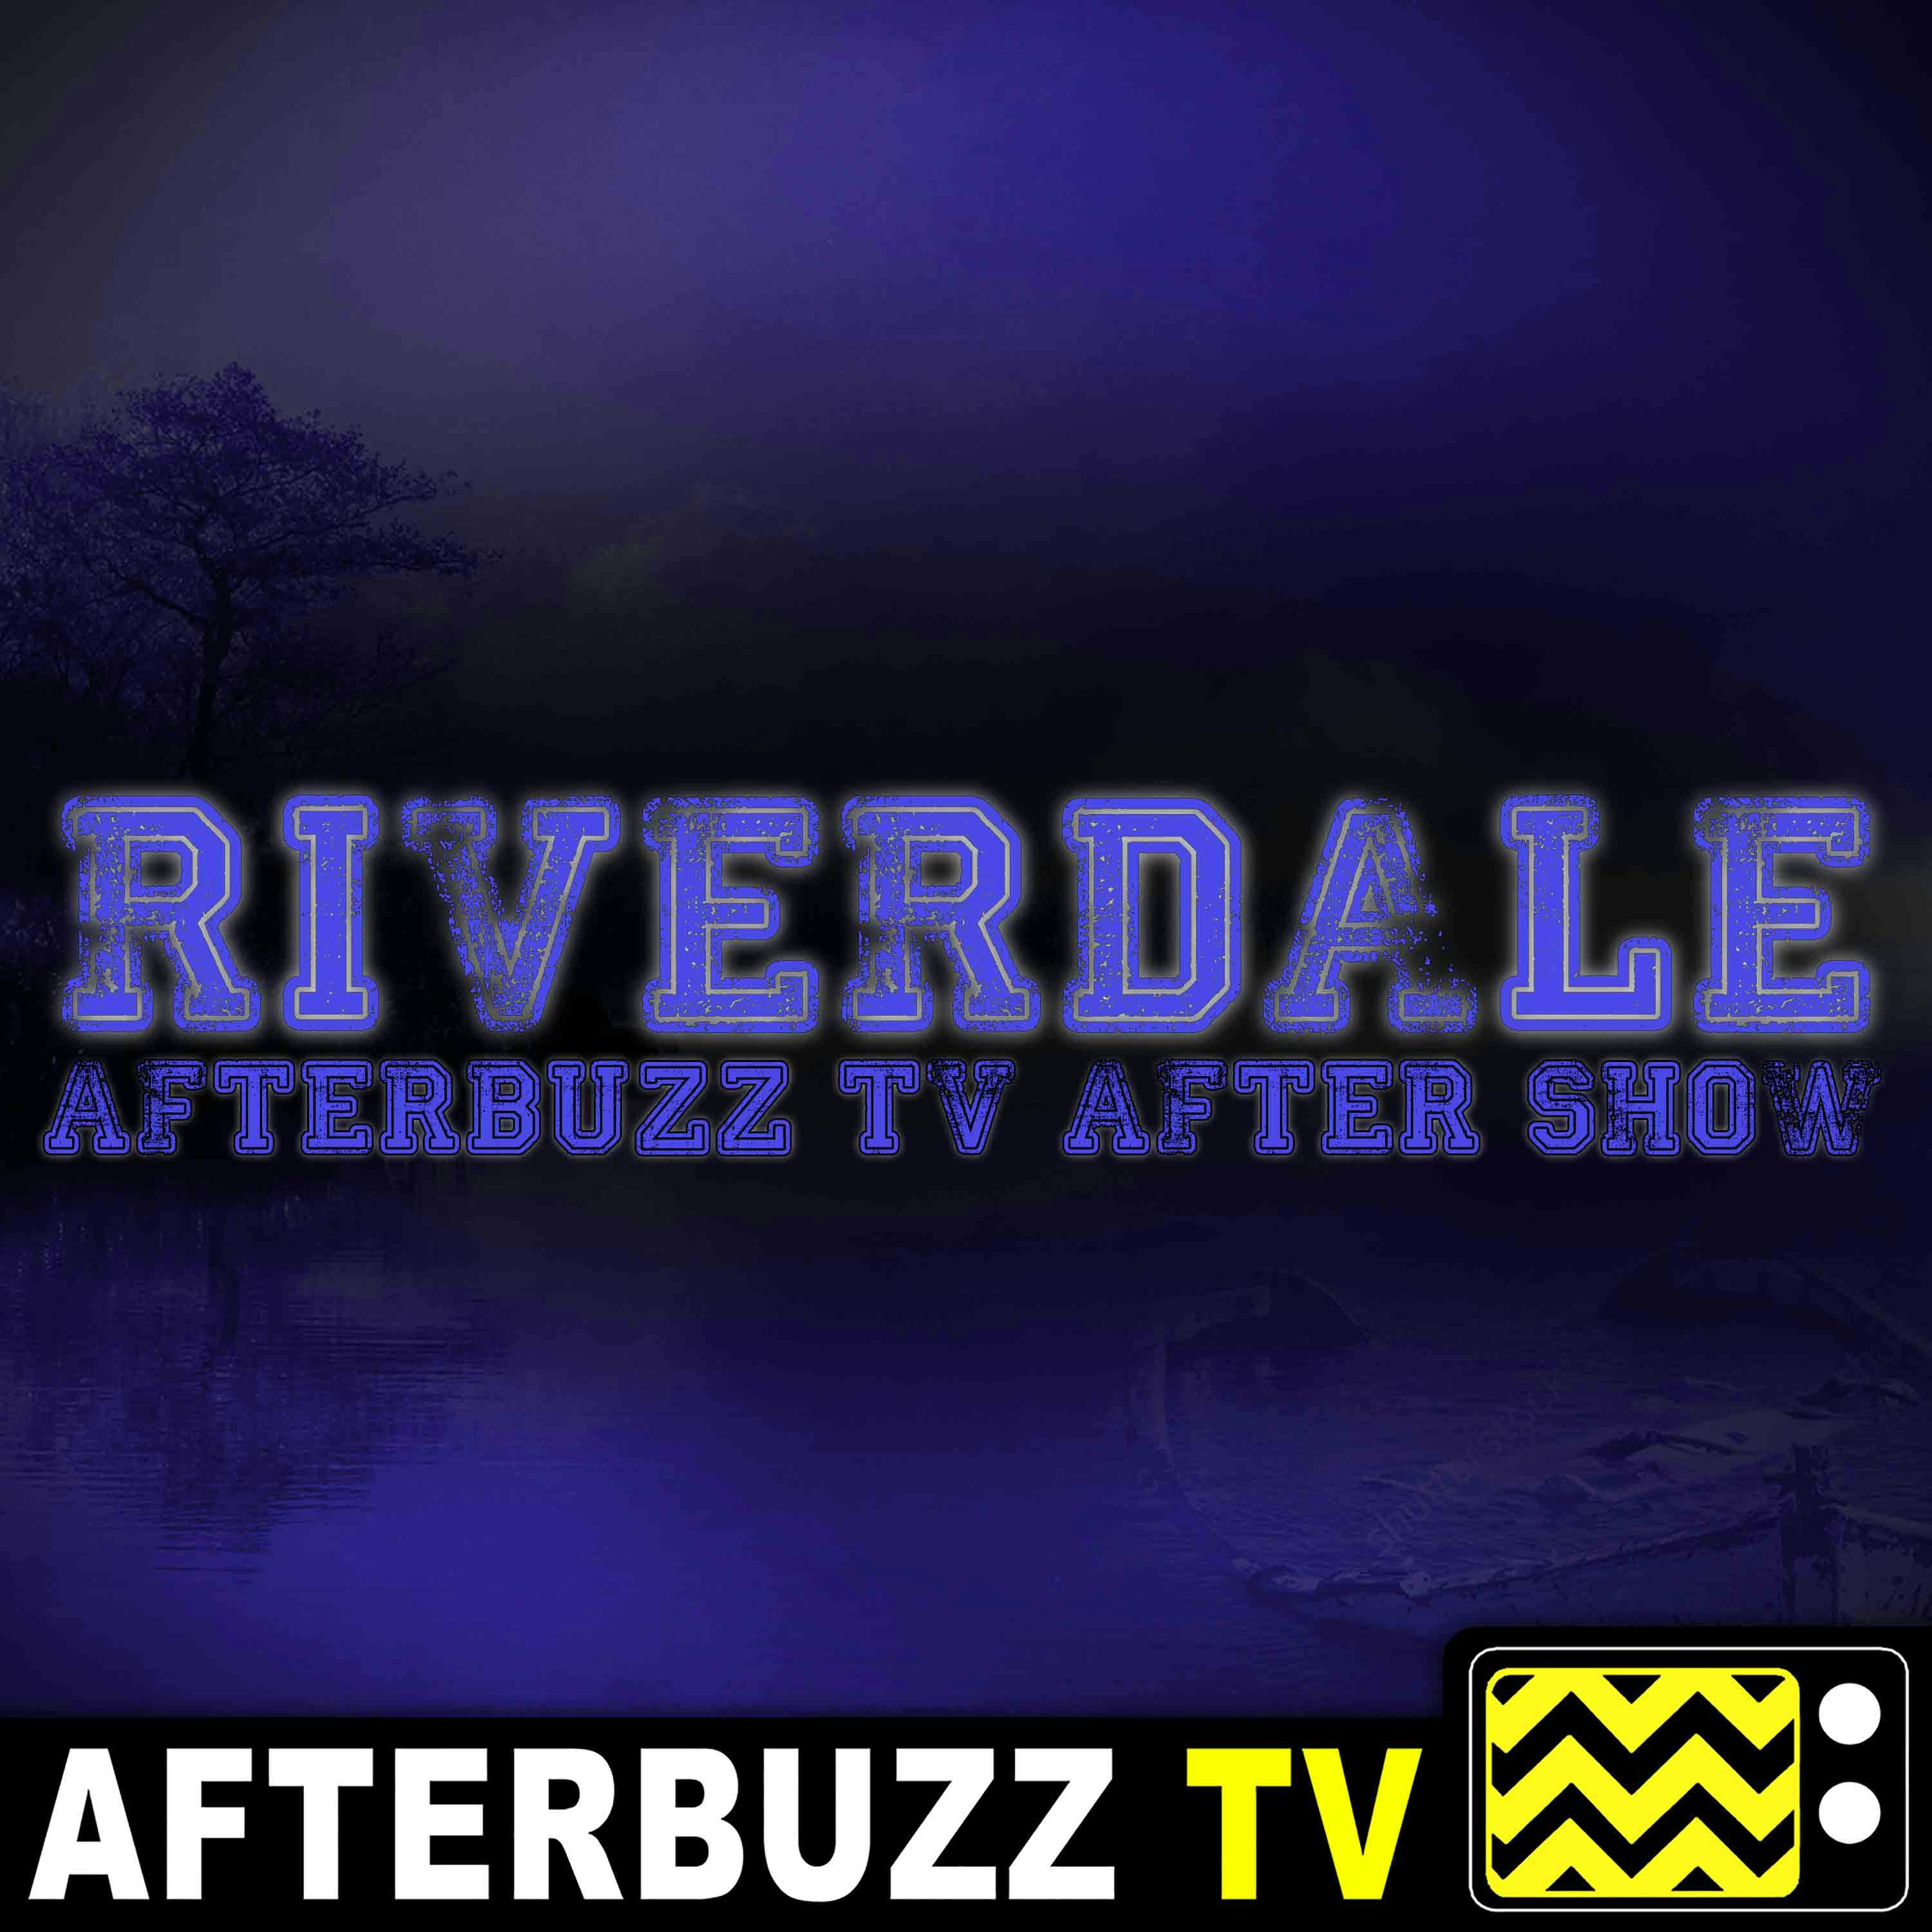 "In Treatment" Season 4 Episode 8 'Riverdale' Review